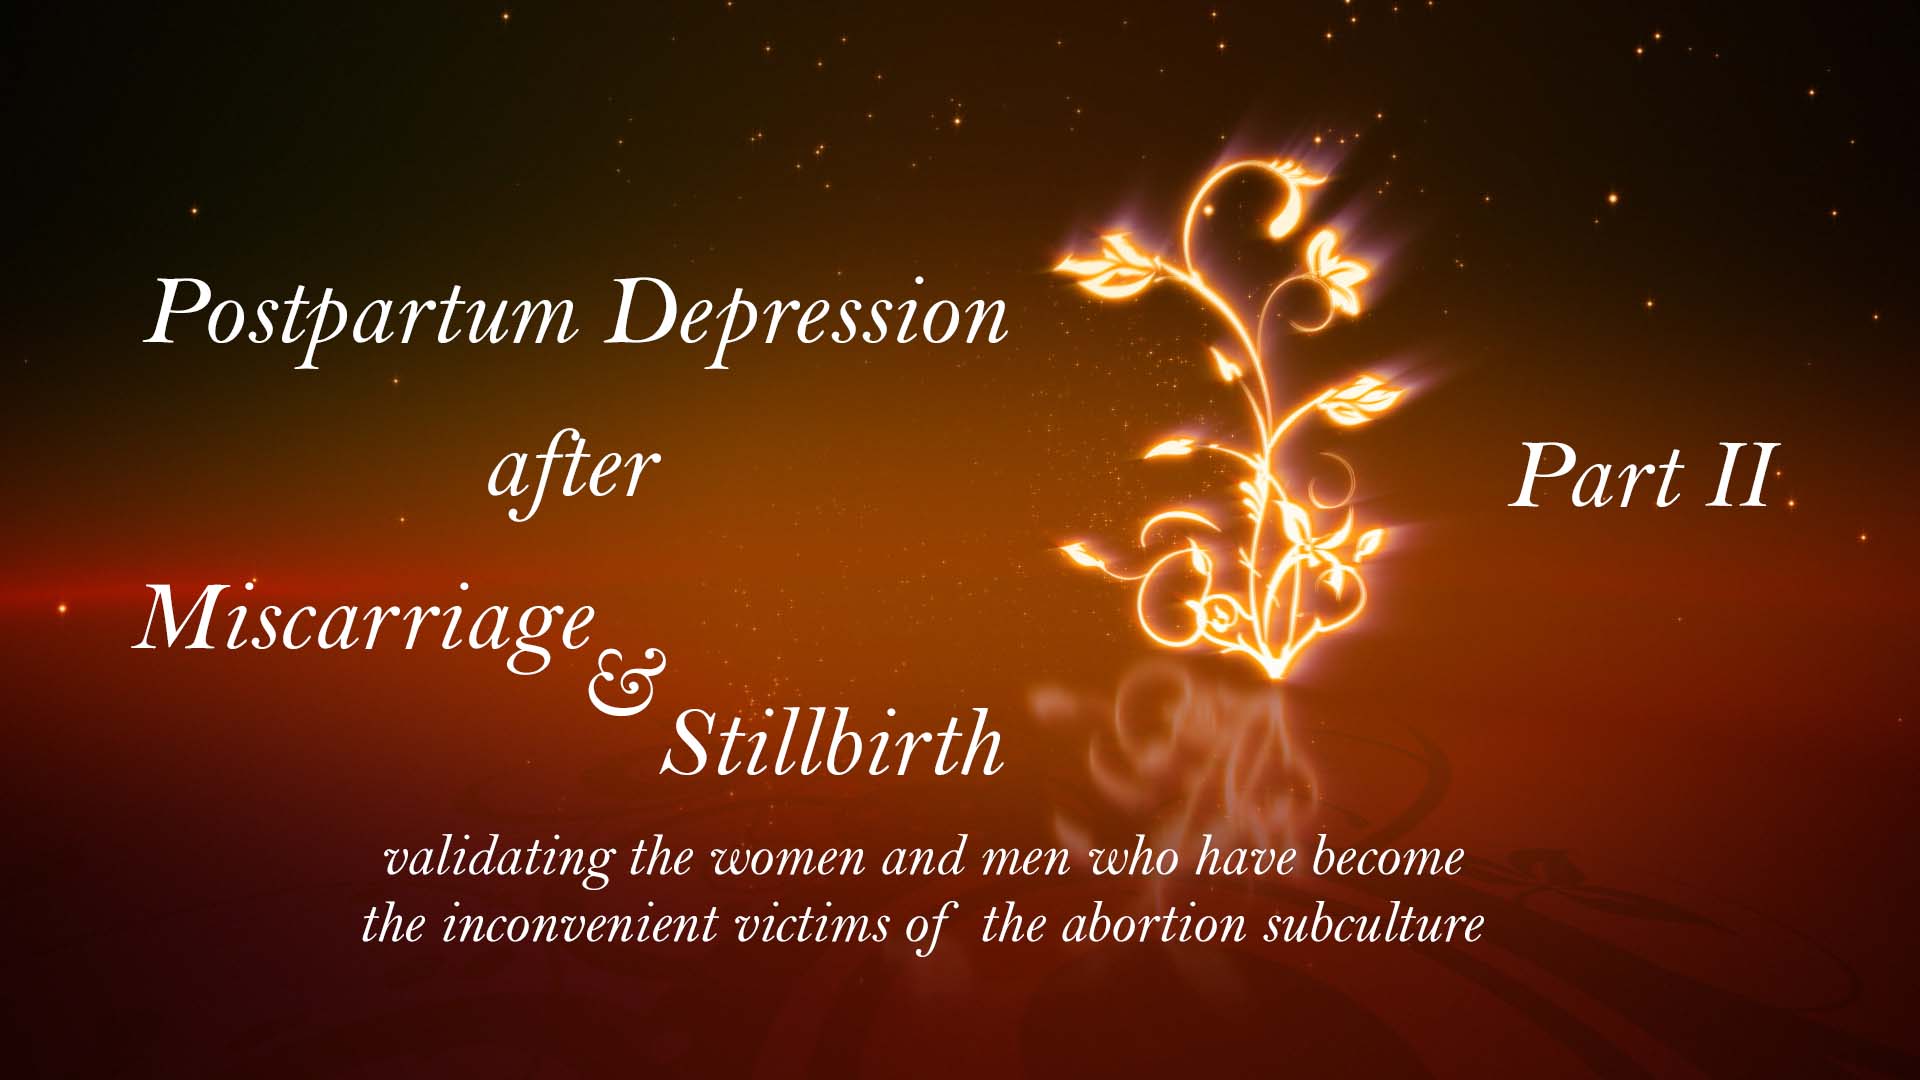 Postpartum Depression after Miscarriage and Stillbirth Part 2: A World Destroyed